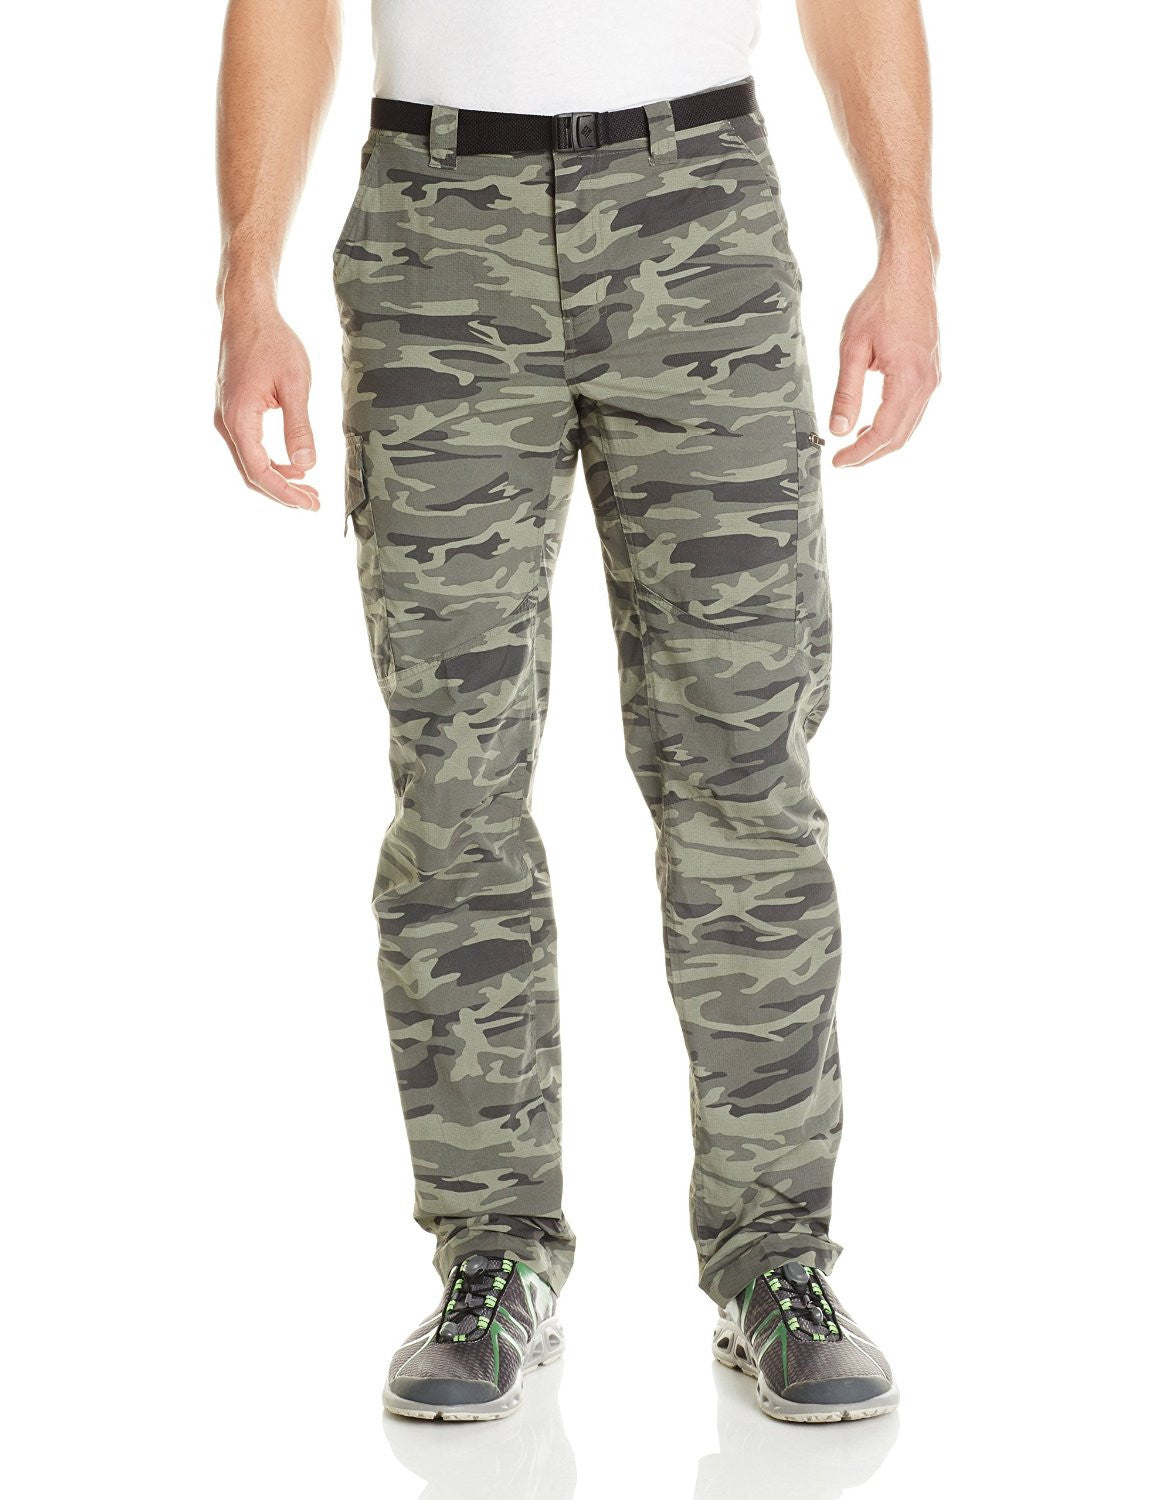 men's gray camo pants